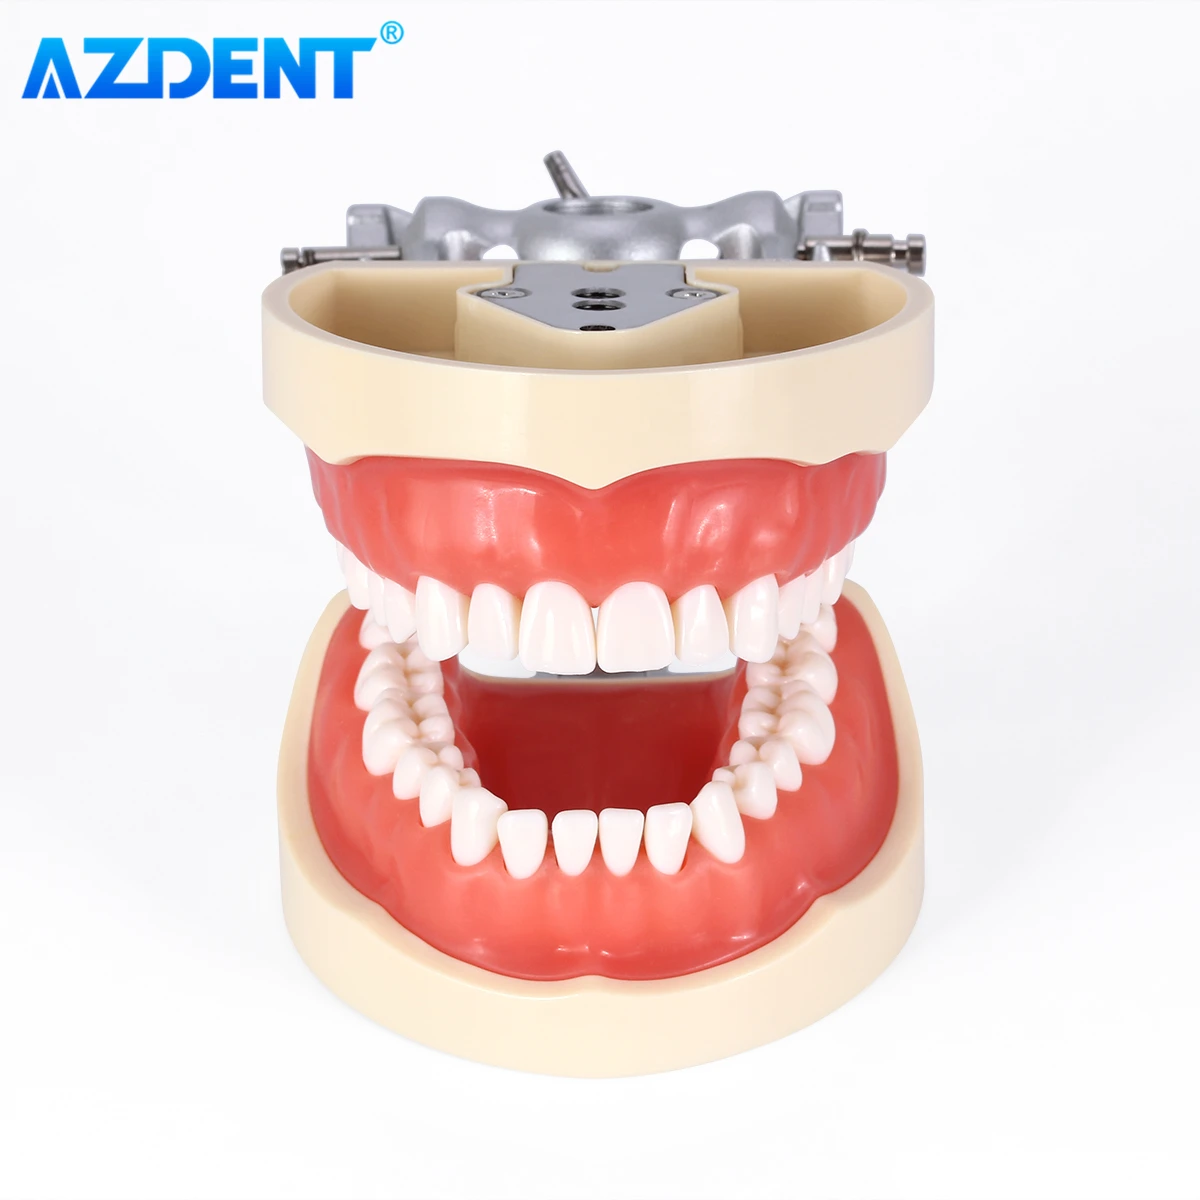 AZDENT Dental Teeth Model 32pcs Removable Teeth Standard Study Teaching Typodont Demonstration Model Dentistry Clinic Dentists